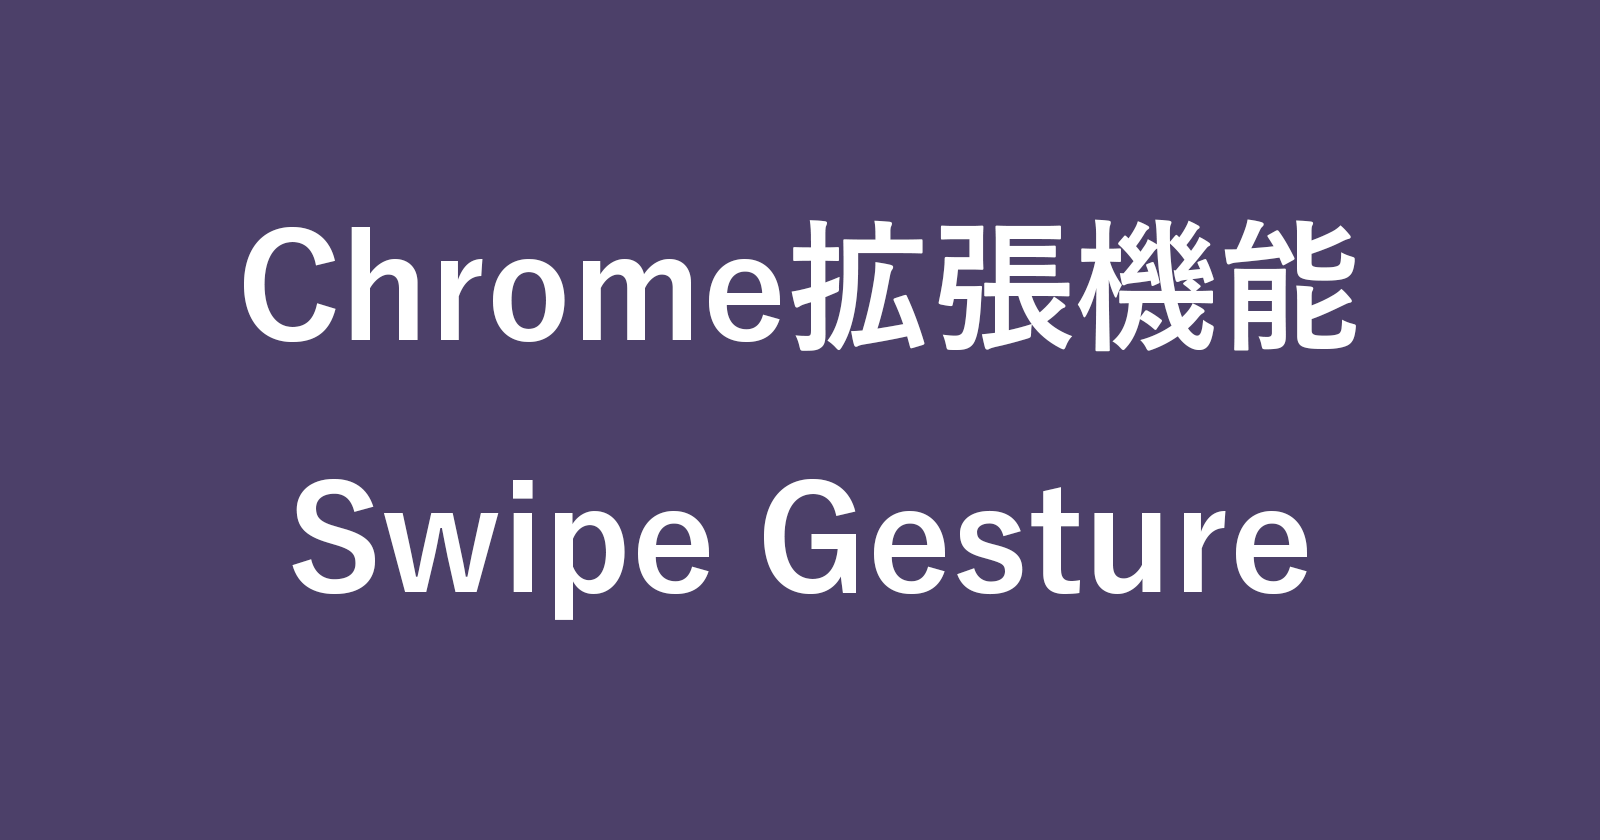 google chrome extention swipe gesture